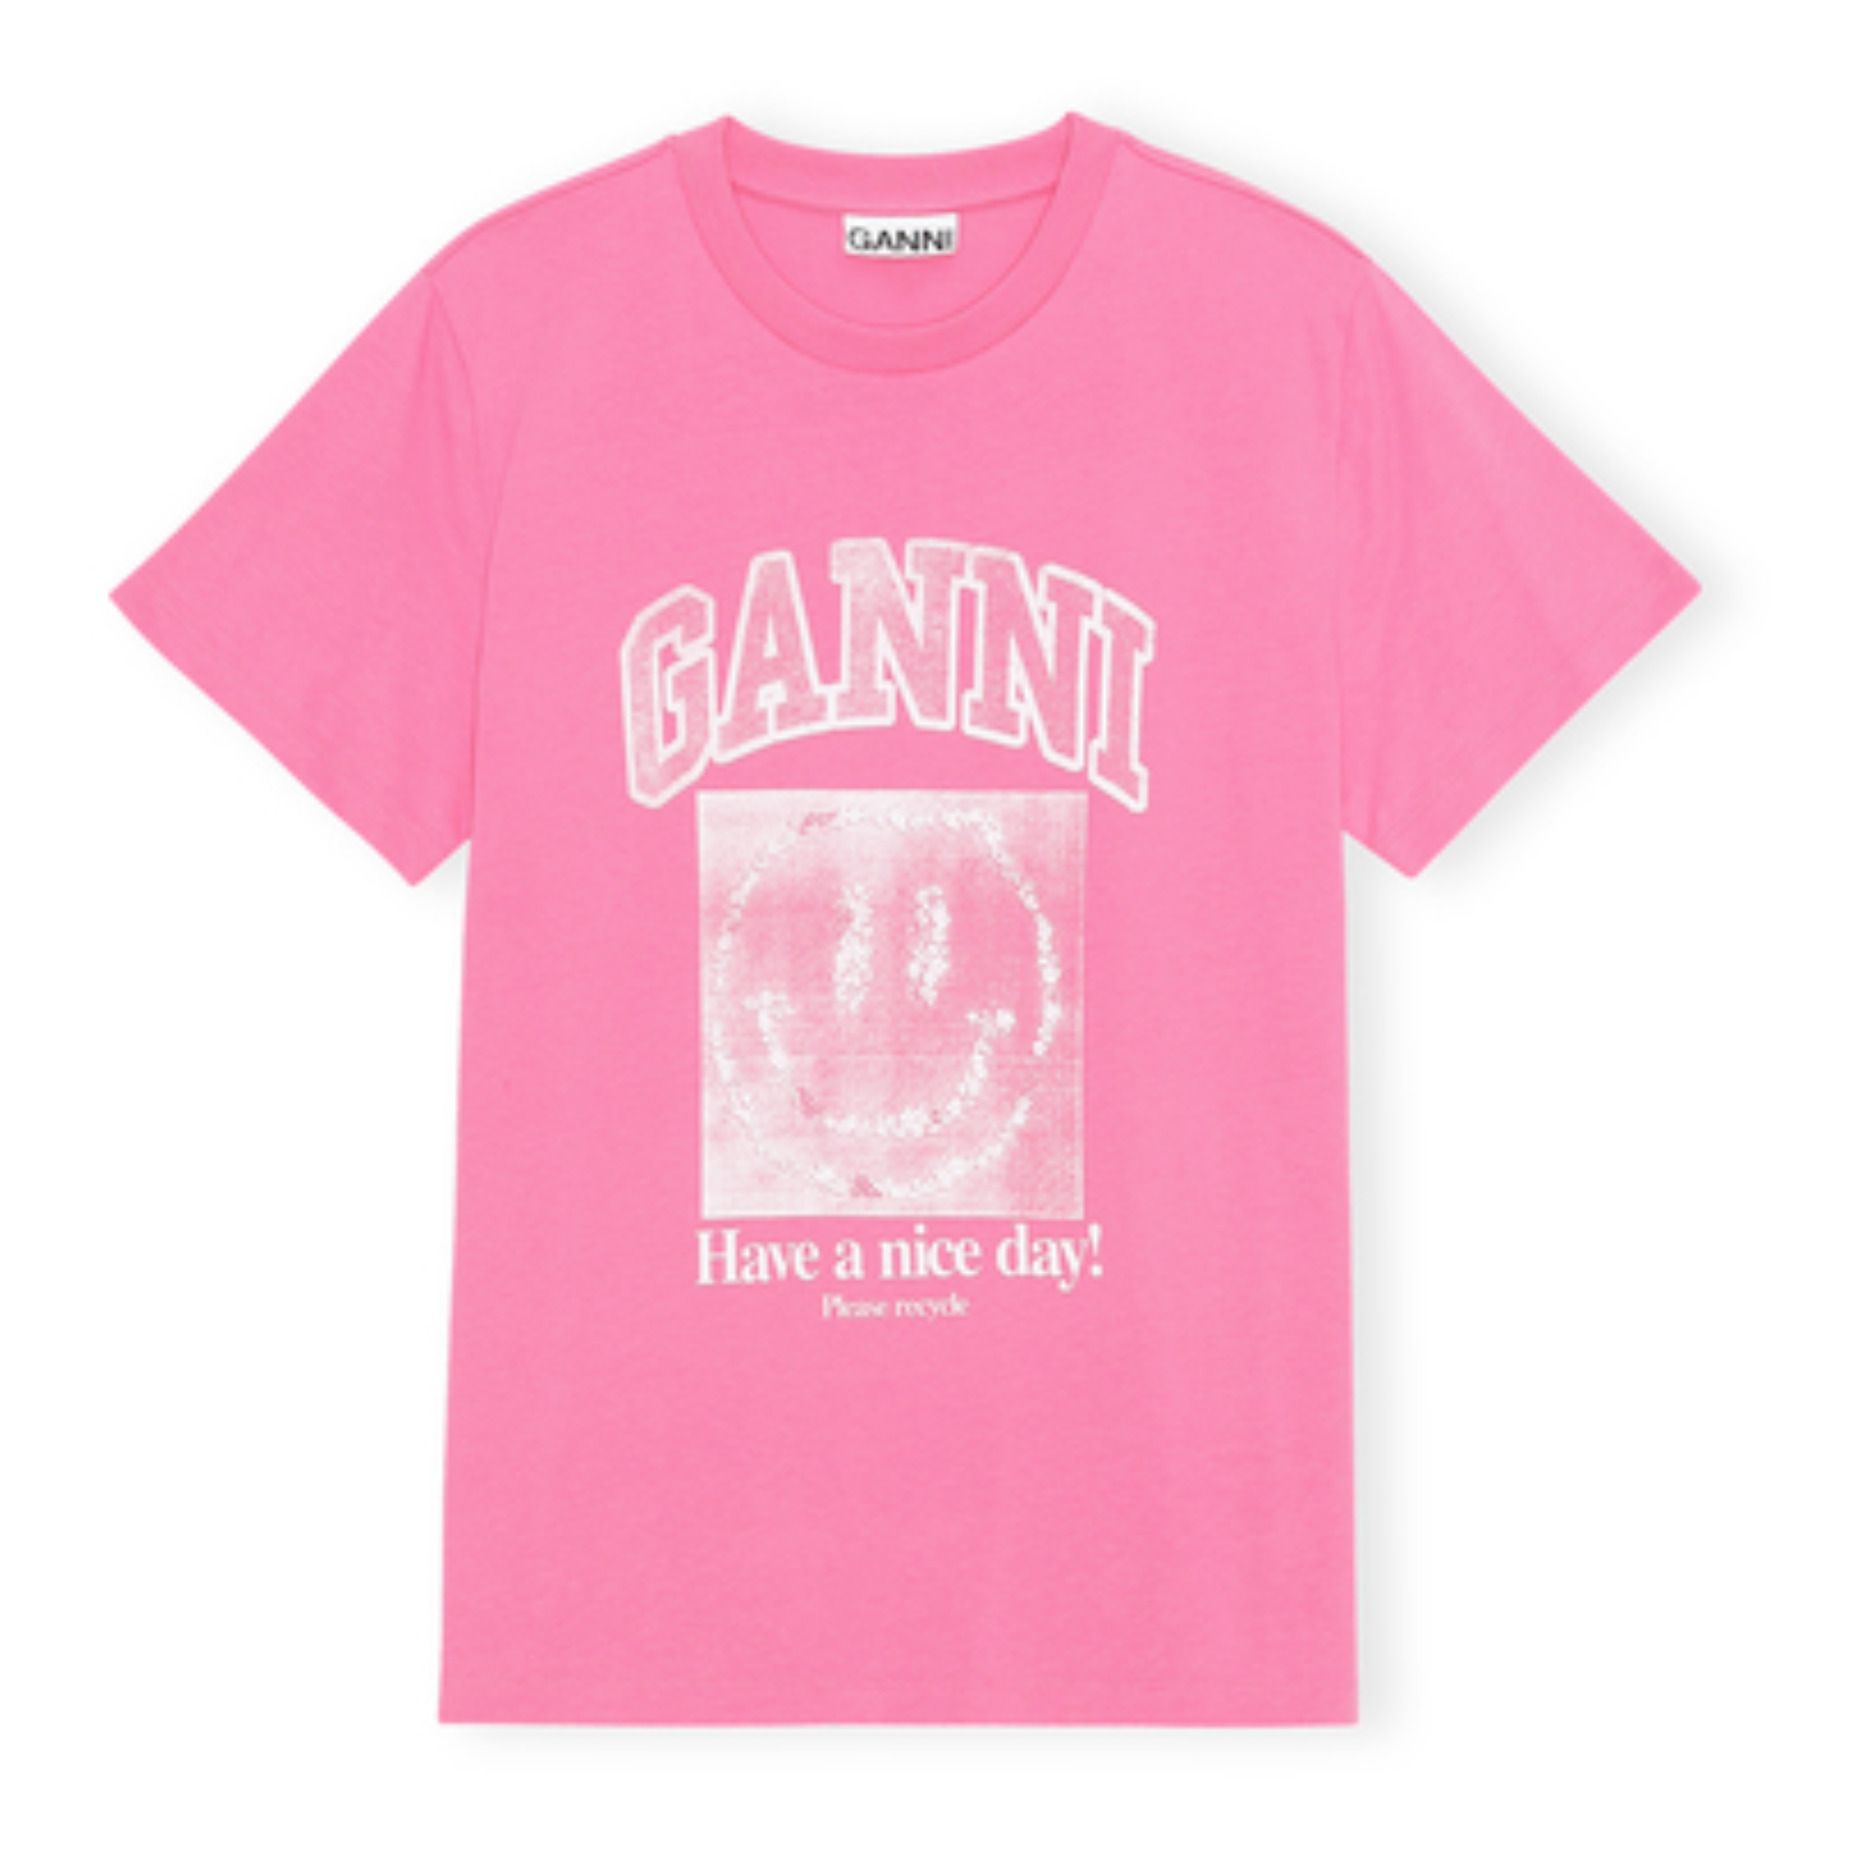 Ganni - T-shirt Ganni Coton Bio - Femme - Rose